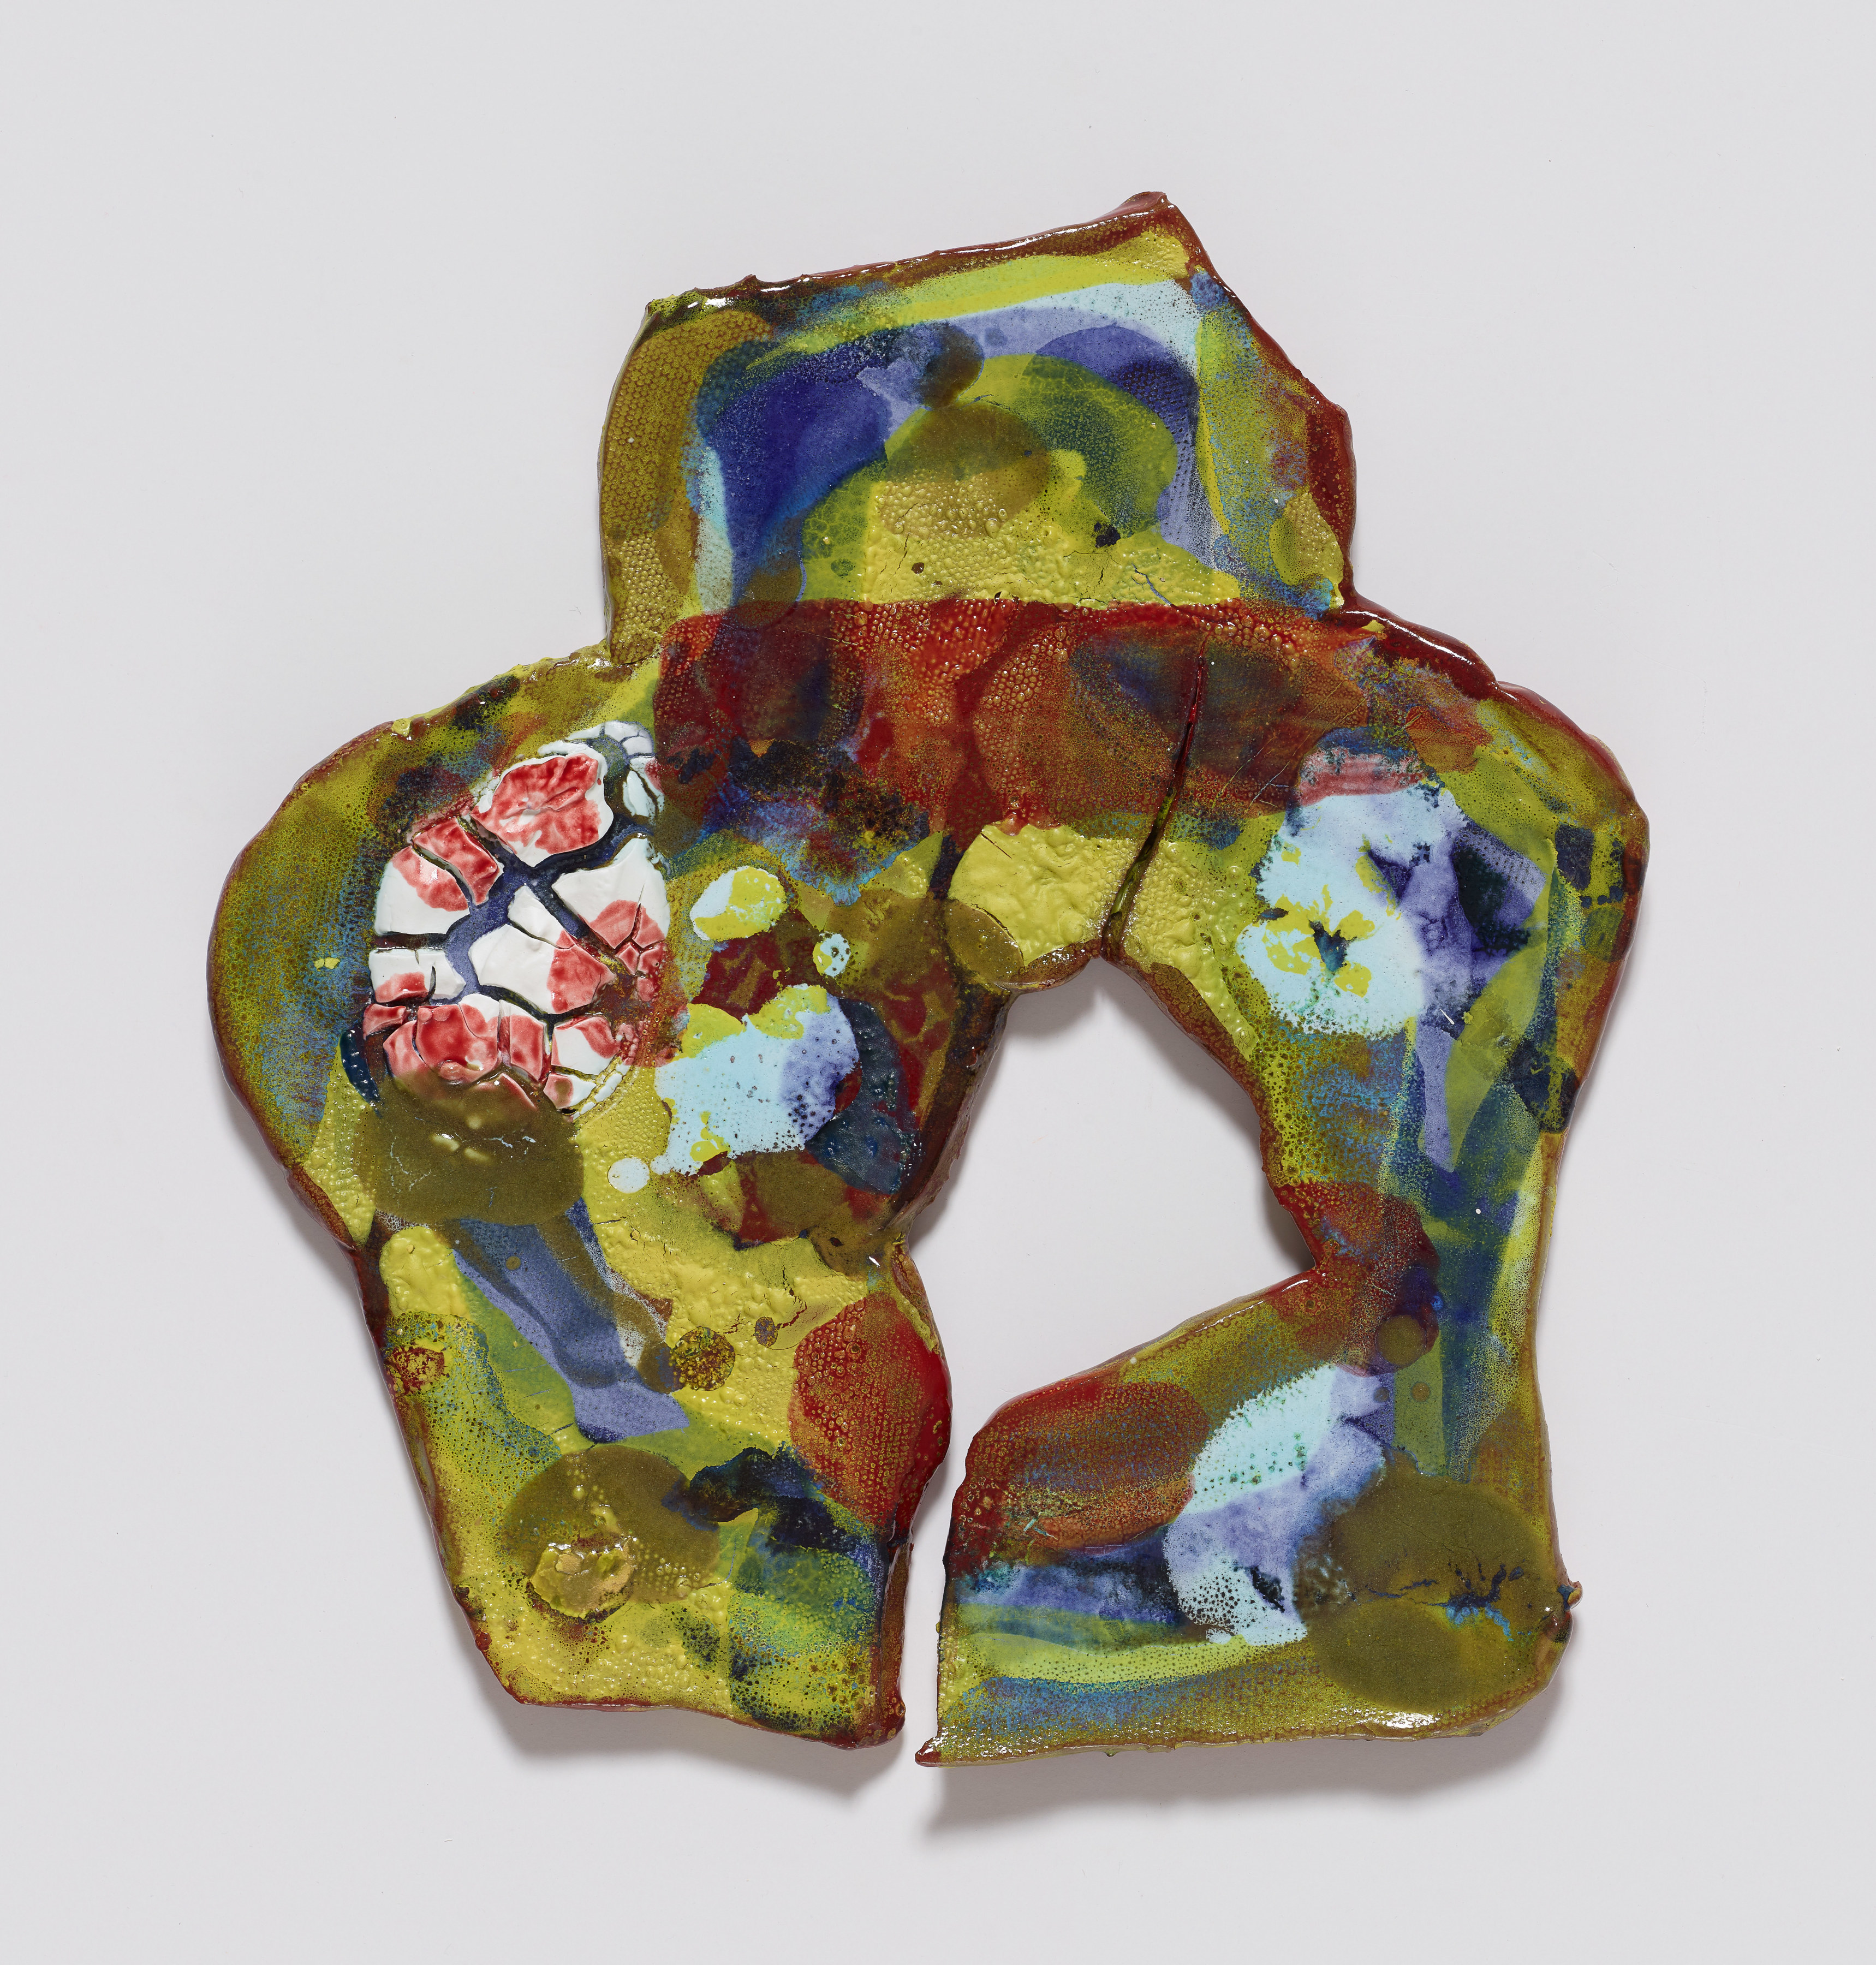 Kellindo, 2013, Terracotta and glaze